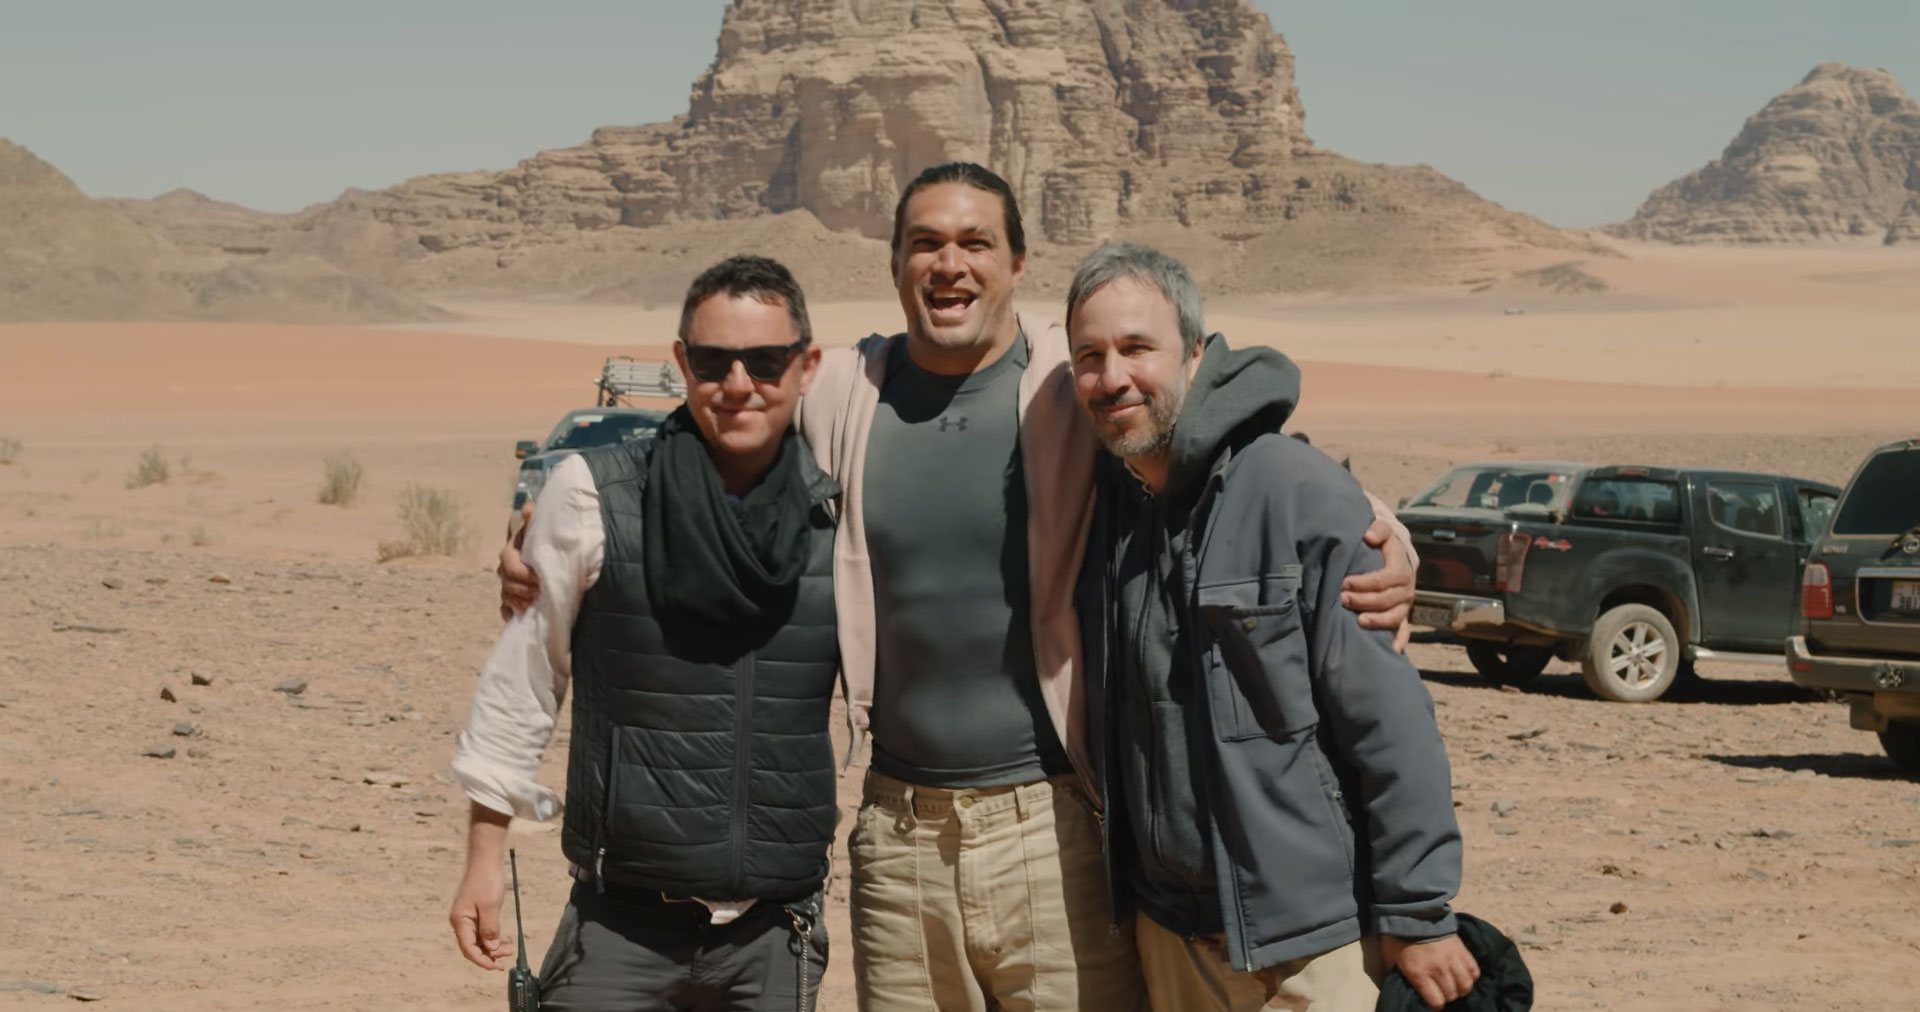 Dune movie behind-the-scenes photo. Denis Villeneuve, Greig Fraser, and Jason Momoa pose for a photo together in the Wadi Rum desert of Jordan.